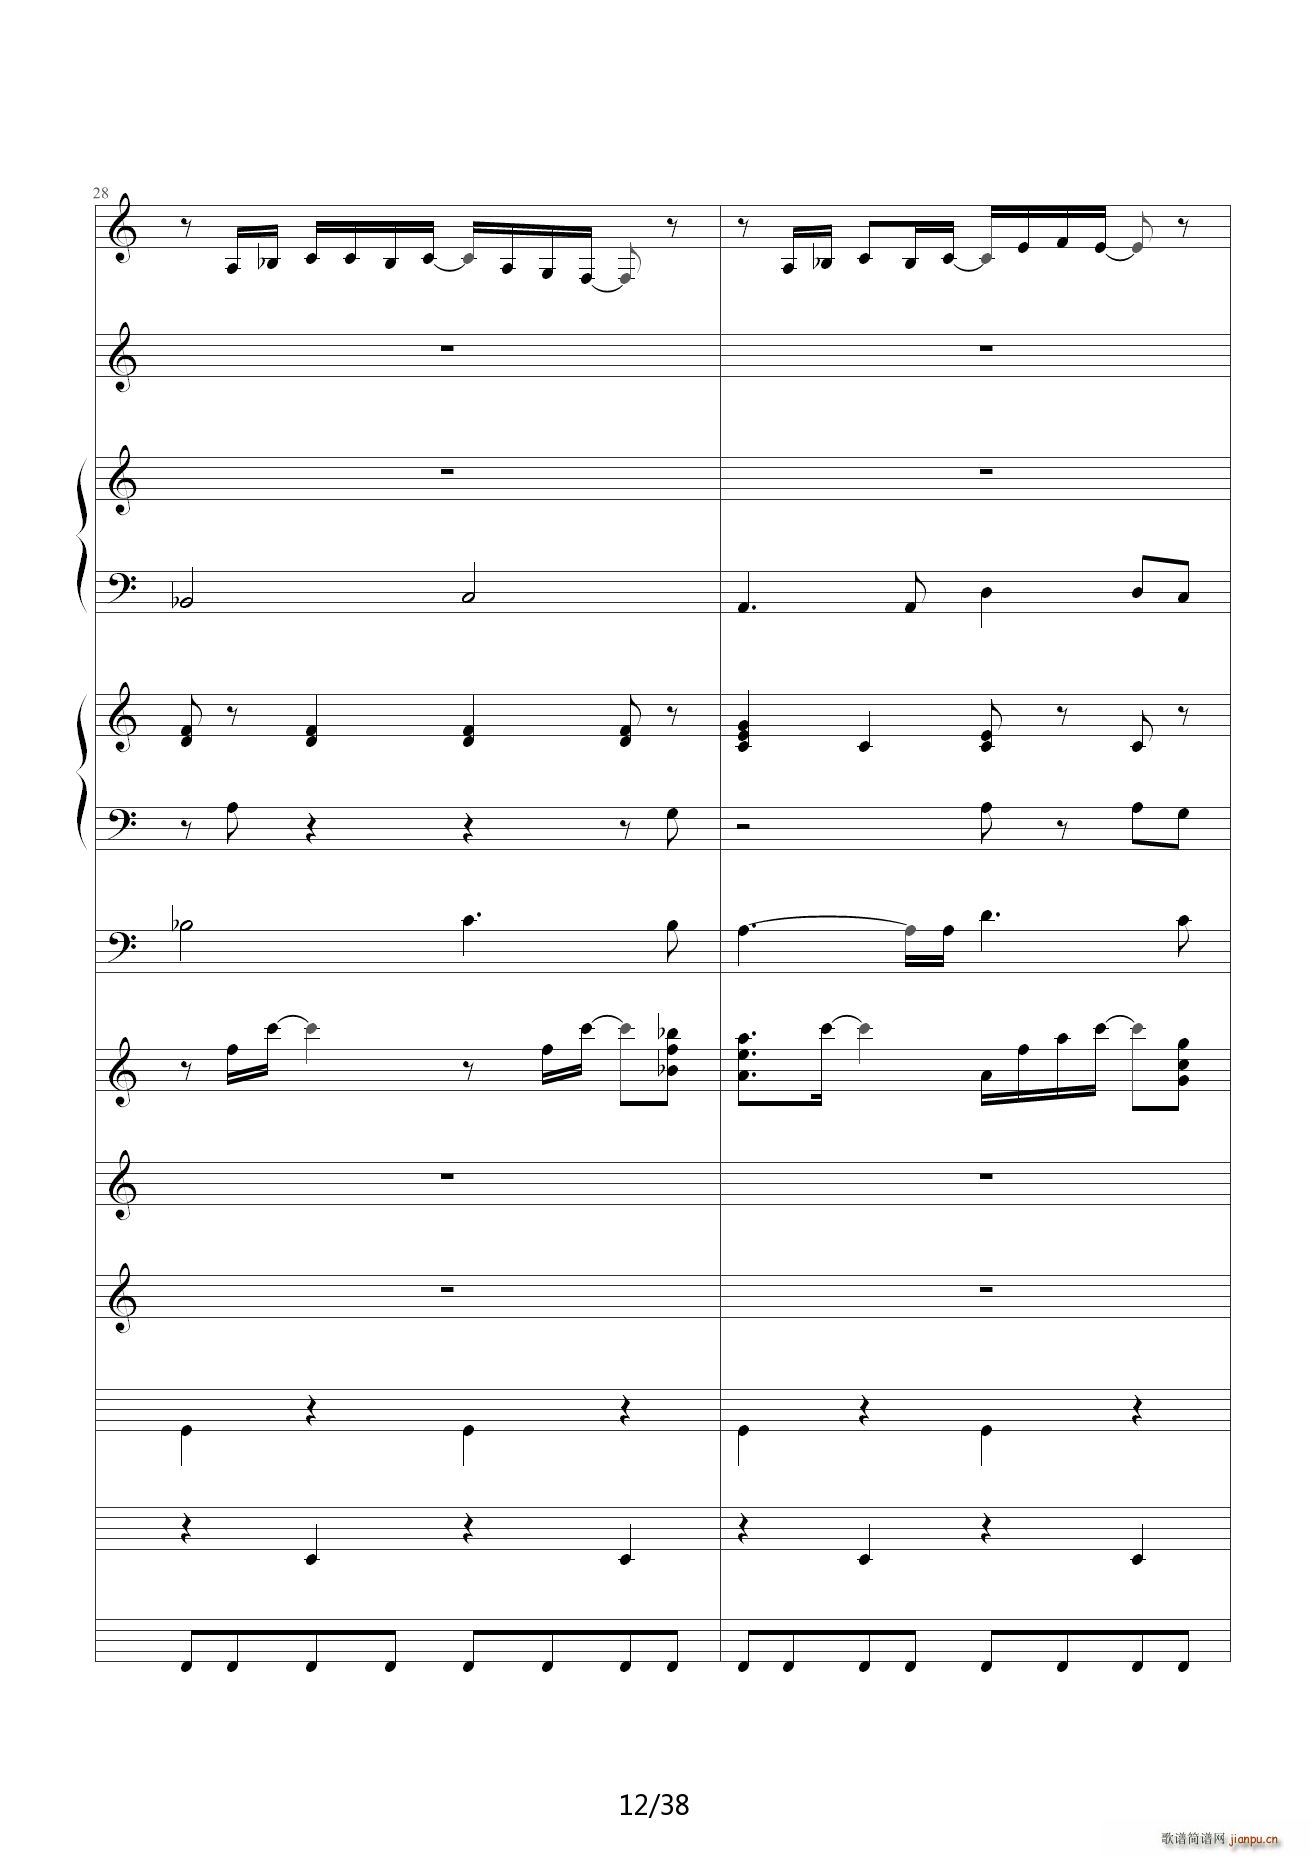 《Angel Beats! OST 一番の宝物,钢琴谱》动漫影视|弹琴吧|钢琴谱|吉他谱|钢琴曲|乐谱|五线谱|高清免费下载|蛐蛐钢琴网